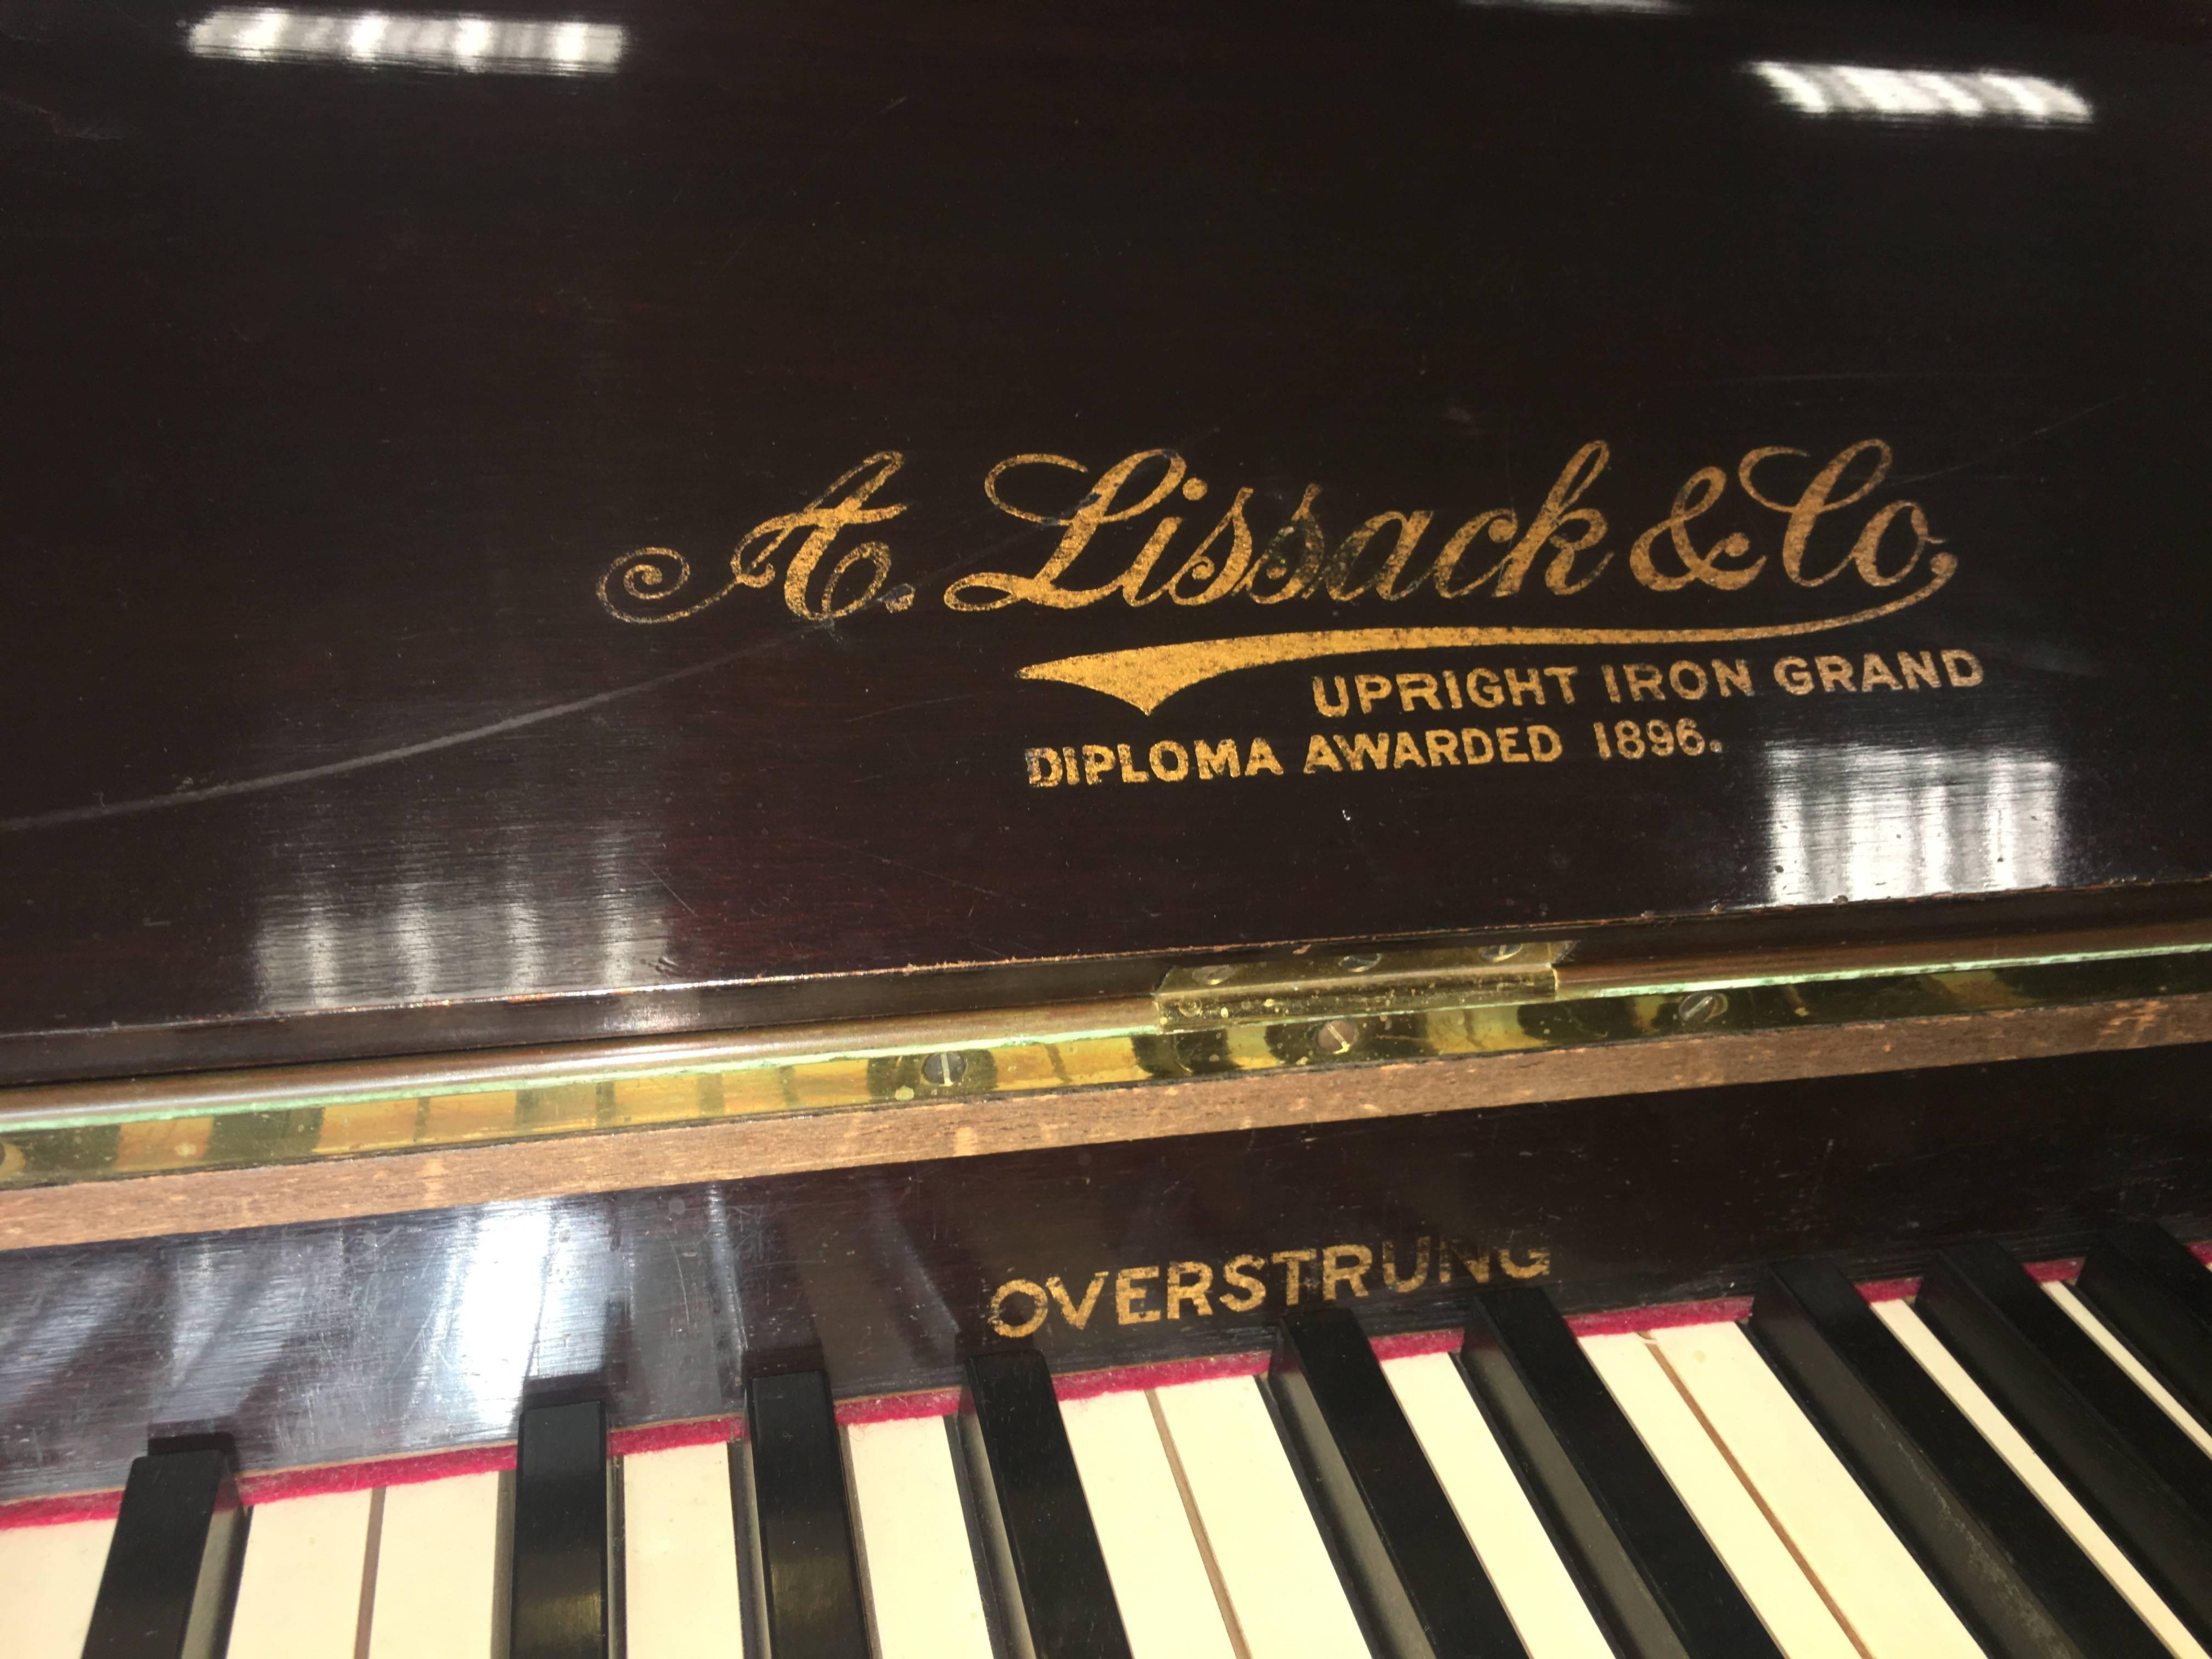 1896 Lissack & Co London Upright Iron Gand Diploma Awarded Piano 1